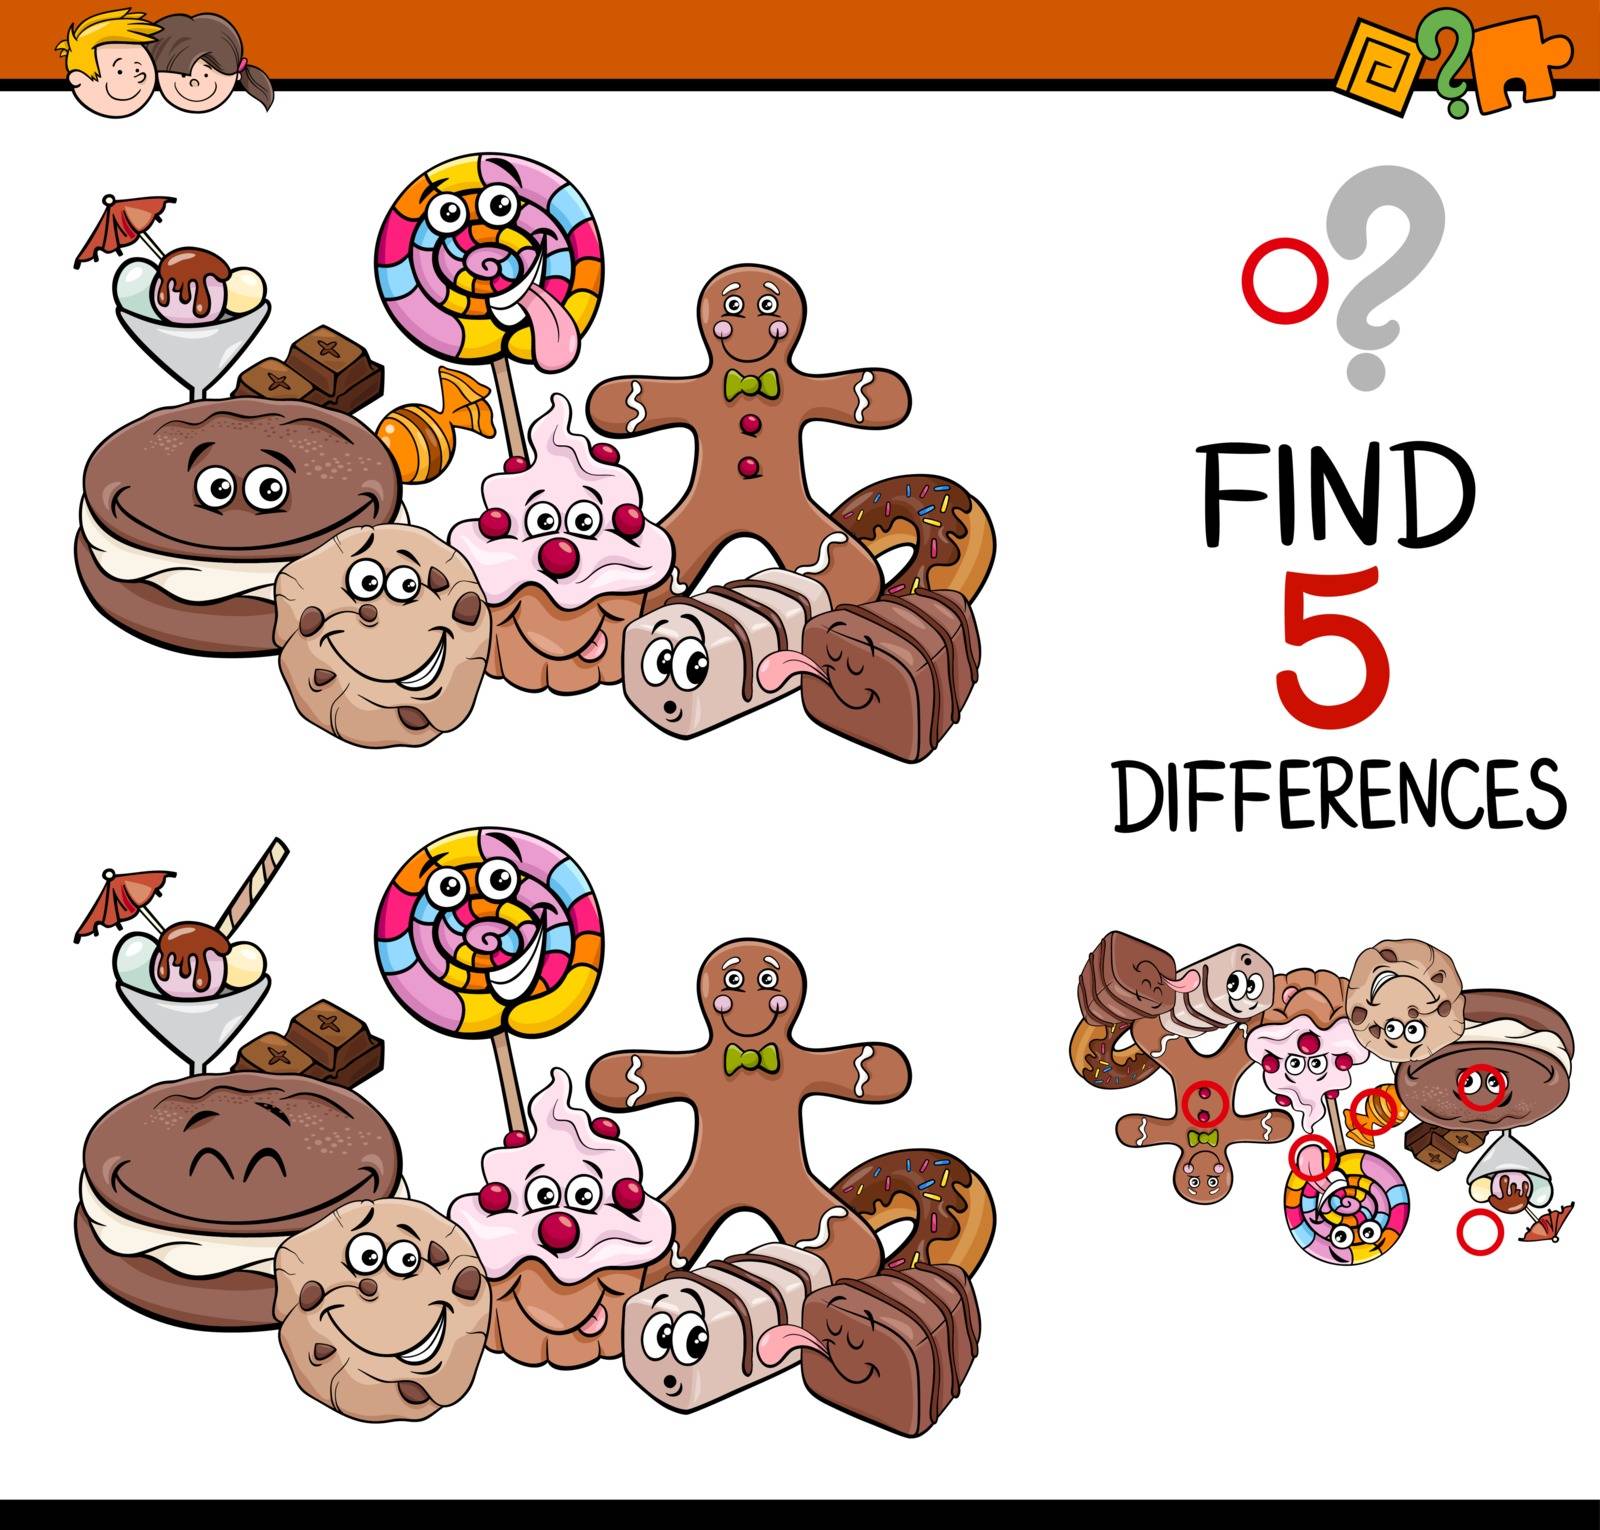 find the differences task by izakowski